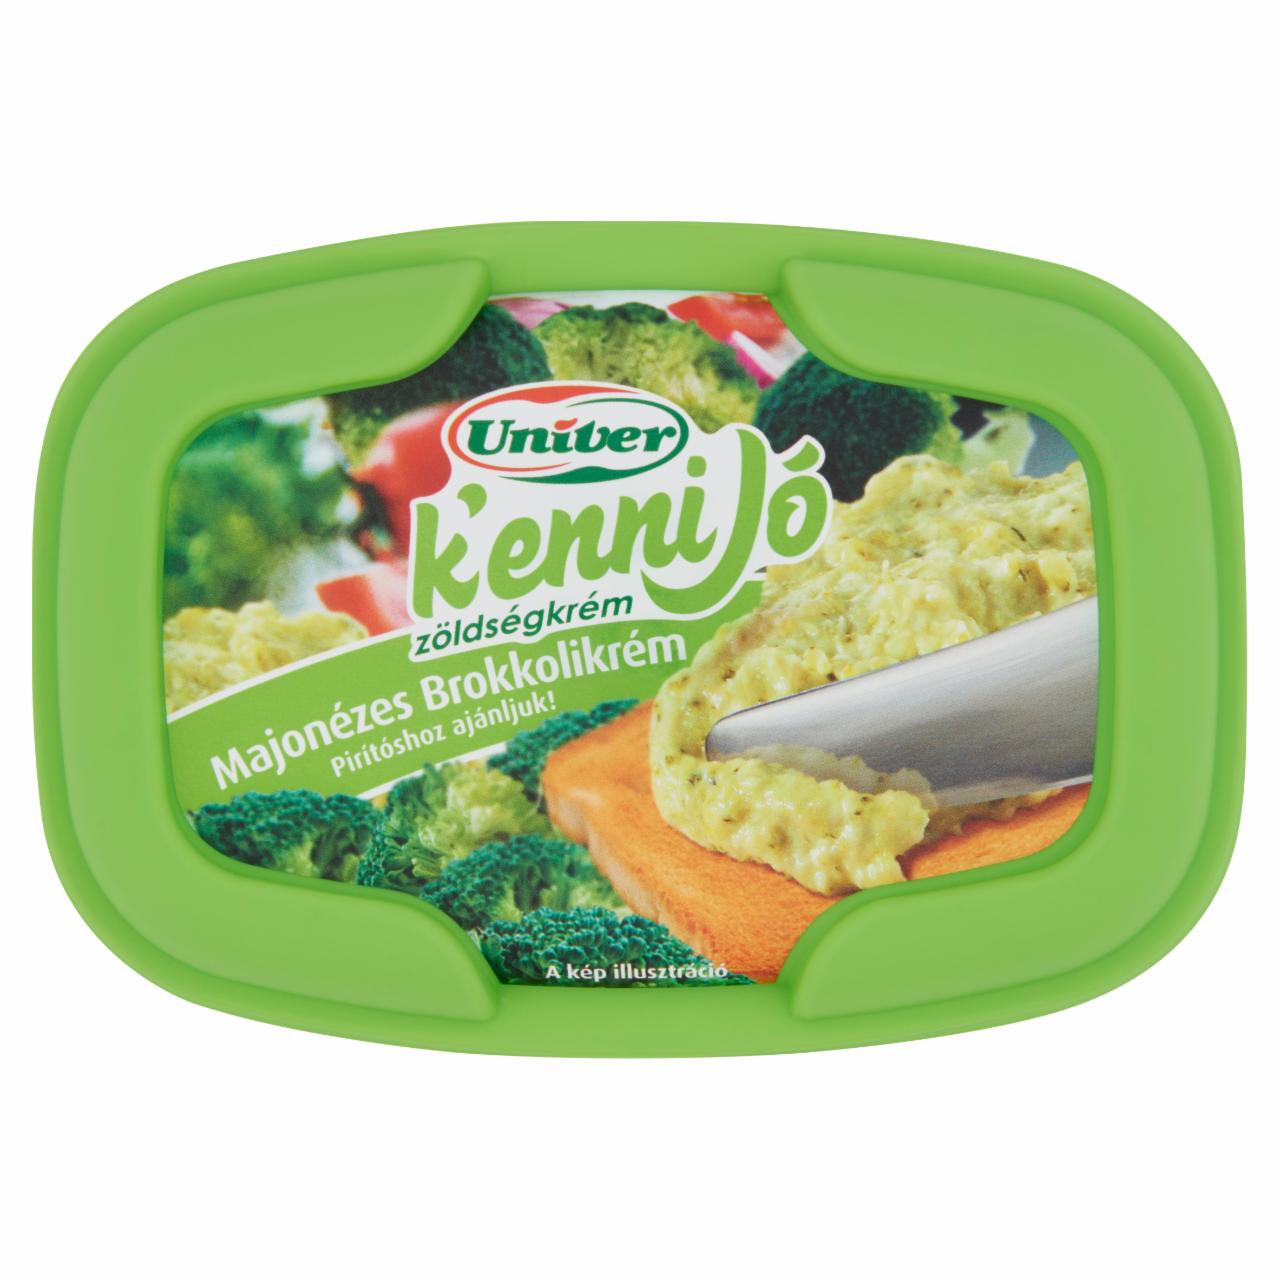 Képek - Univer K'enni jó majonézes brokkolikrém 160 g